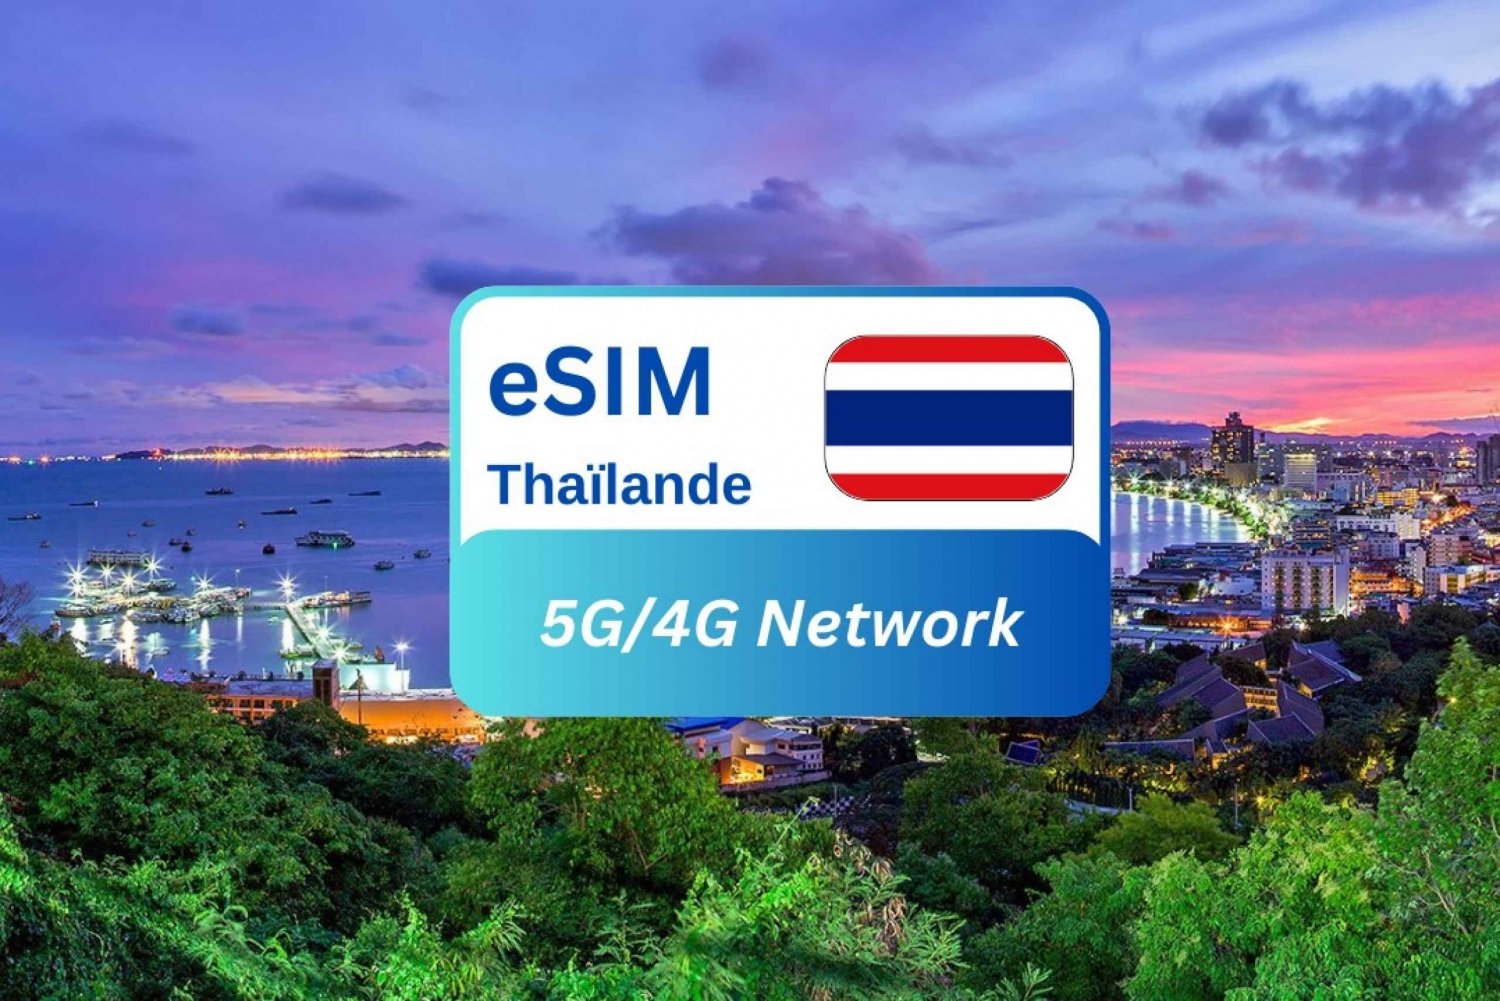 Pattaya: Thailand eSIM Roaming Data Plan for Travel